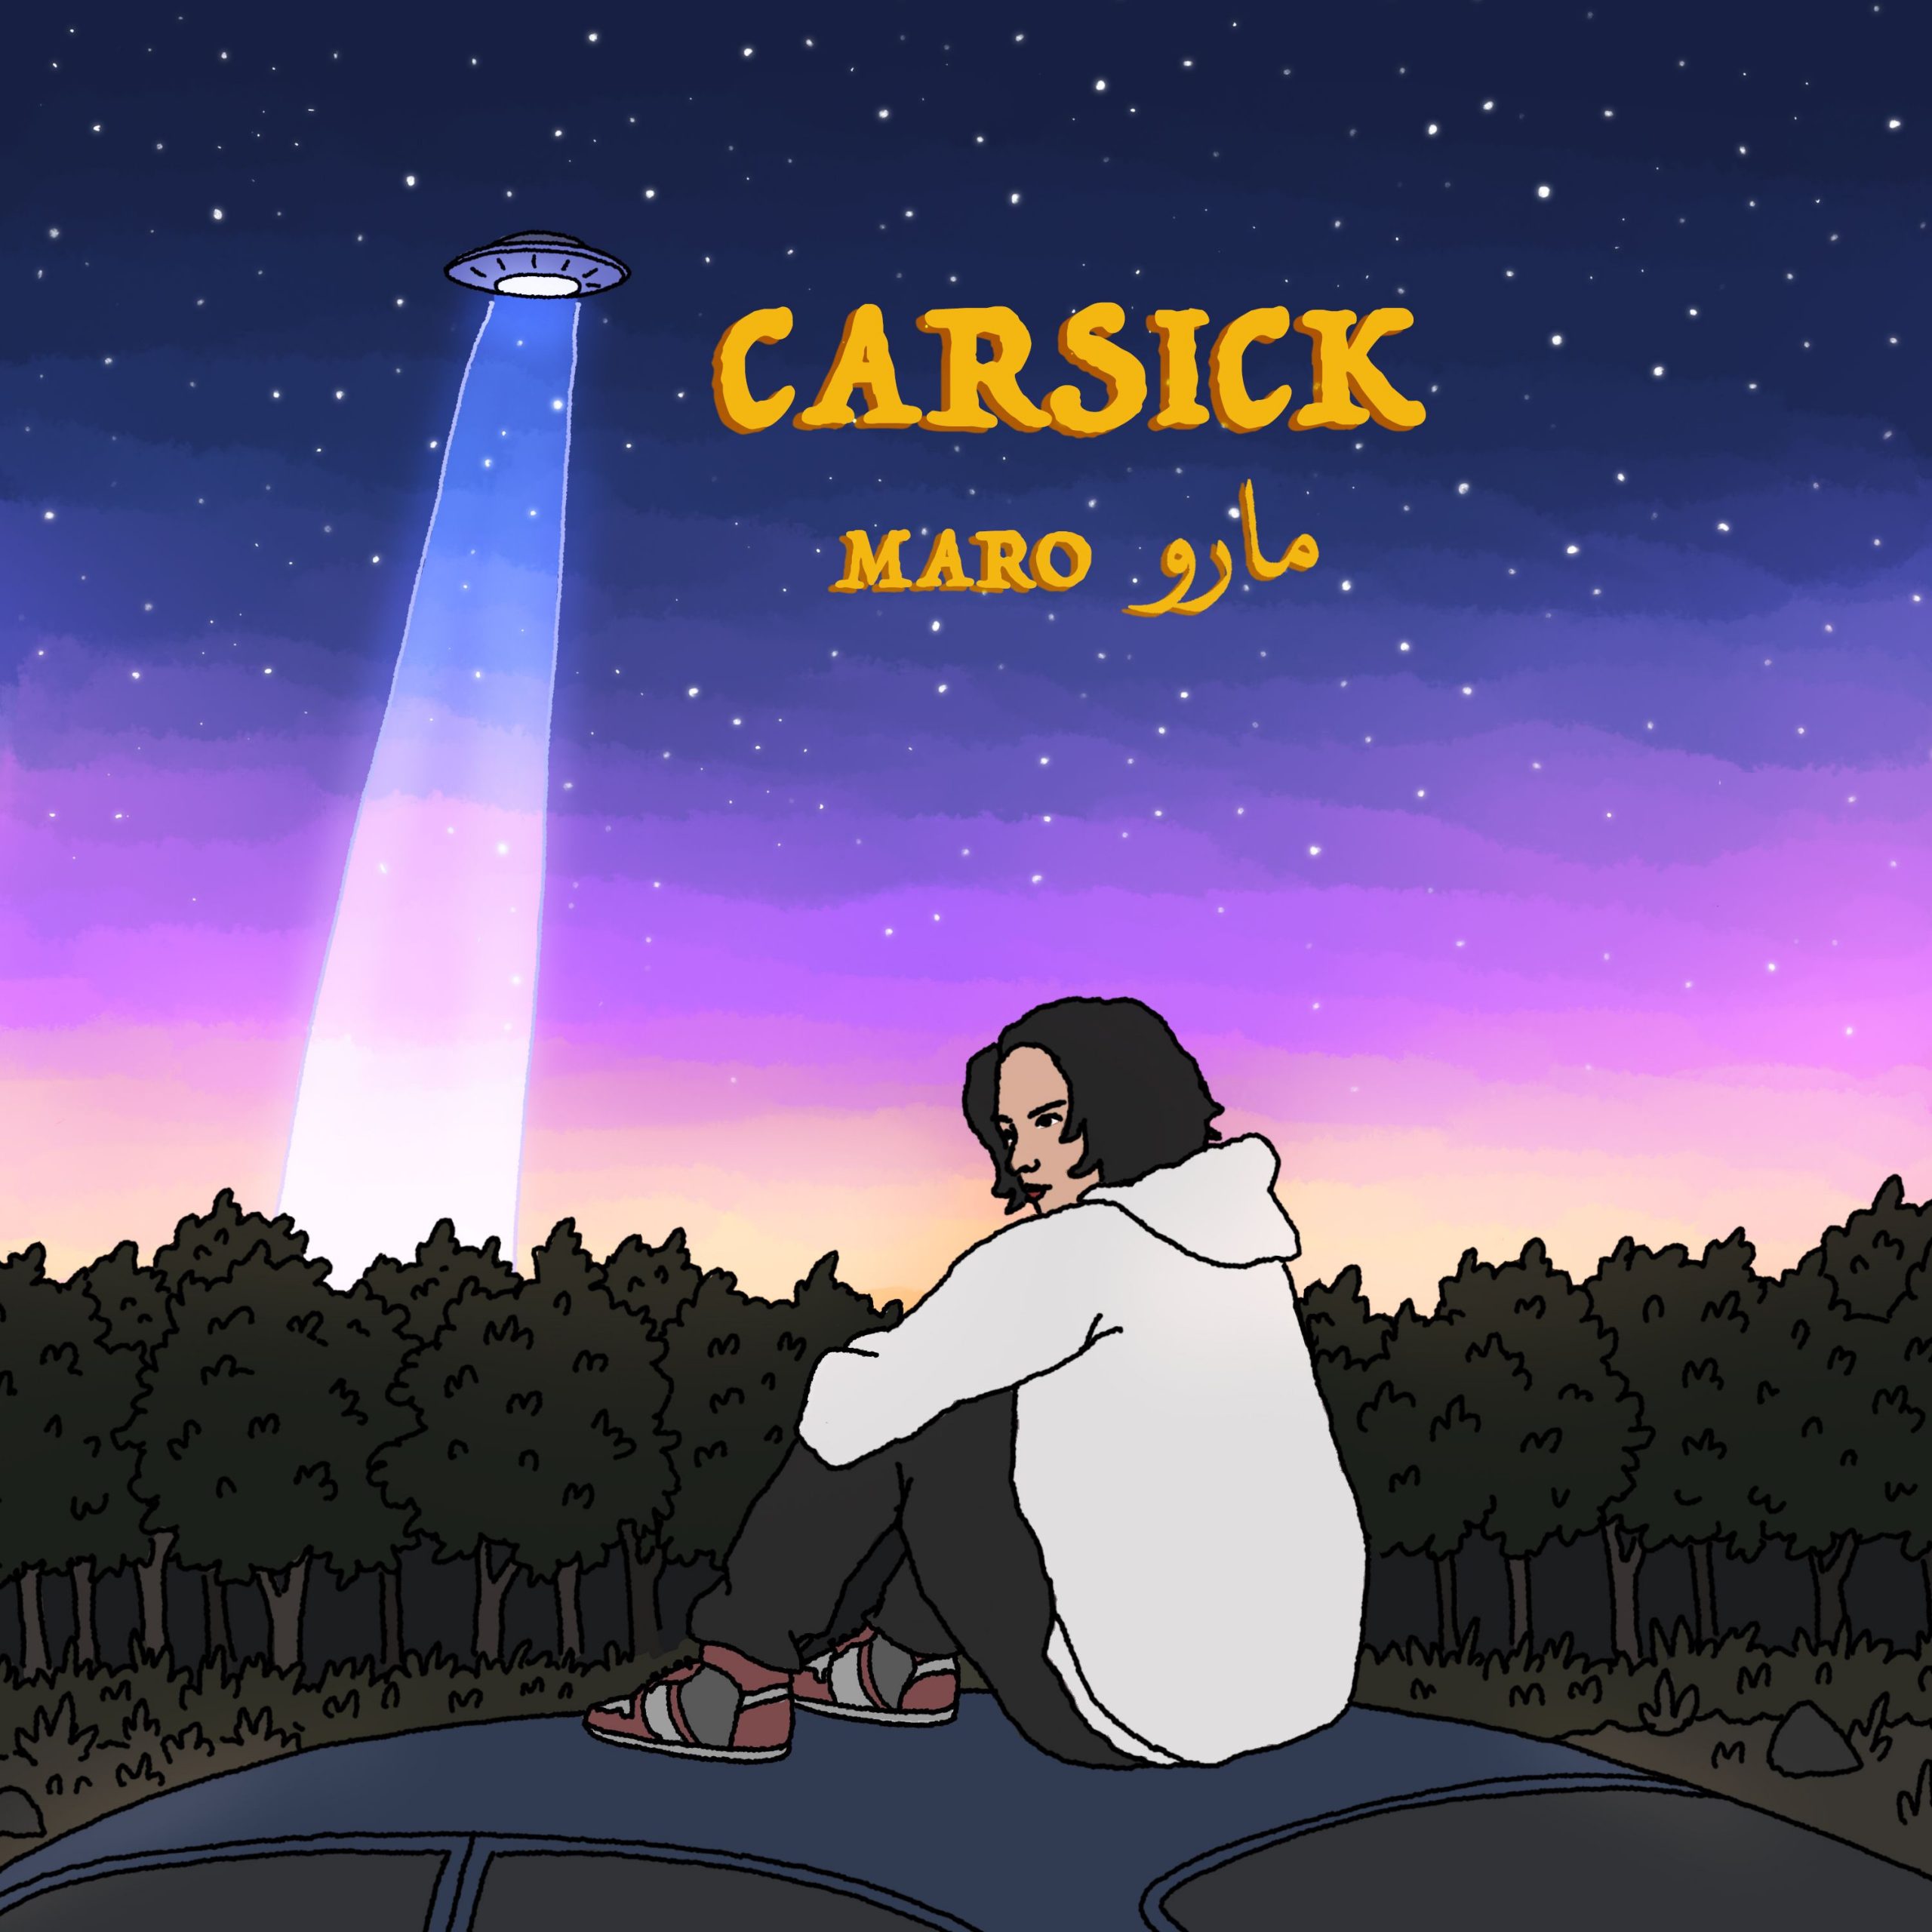 Maro - "Carsick" single artwork